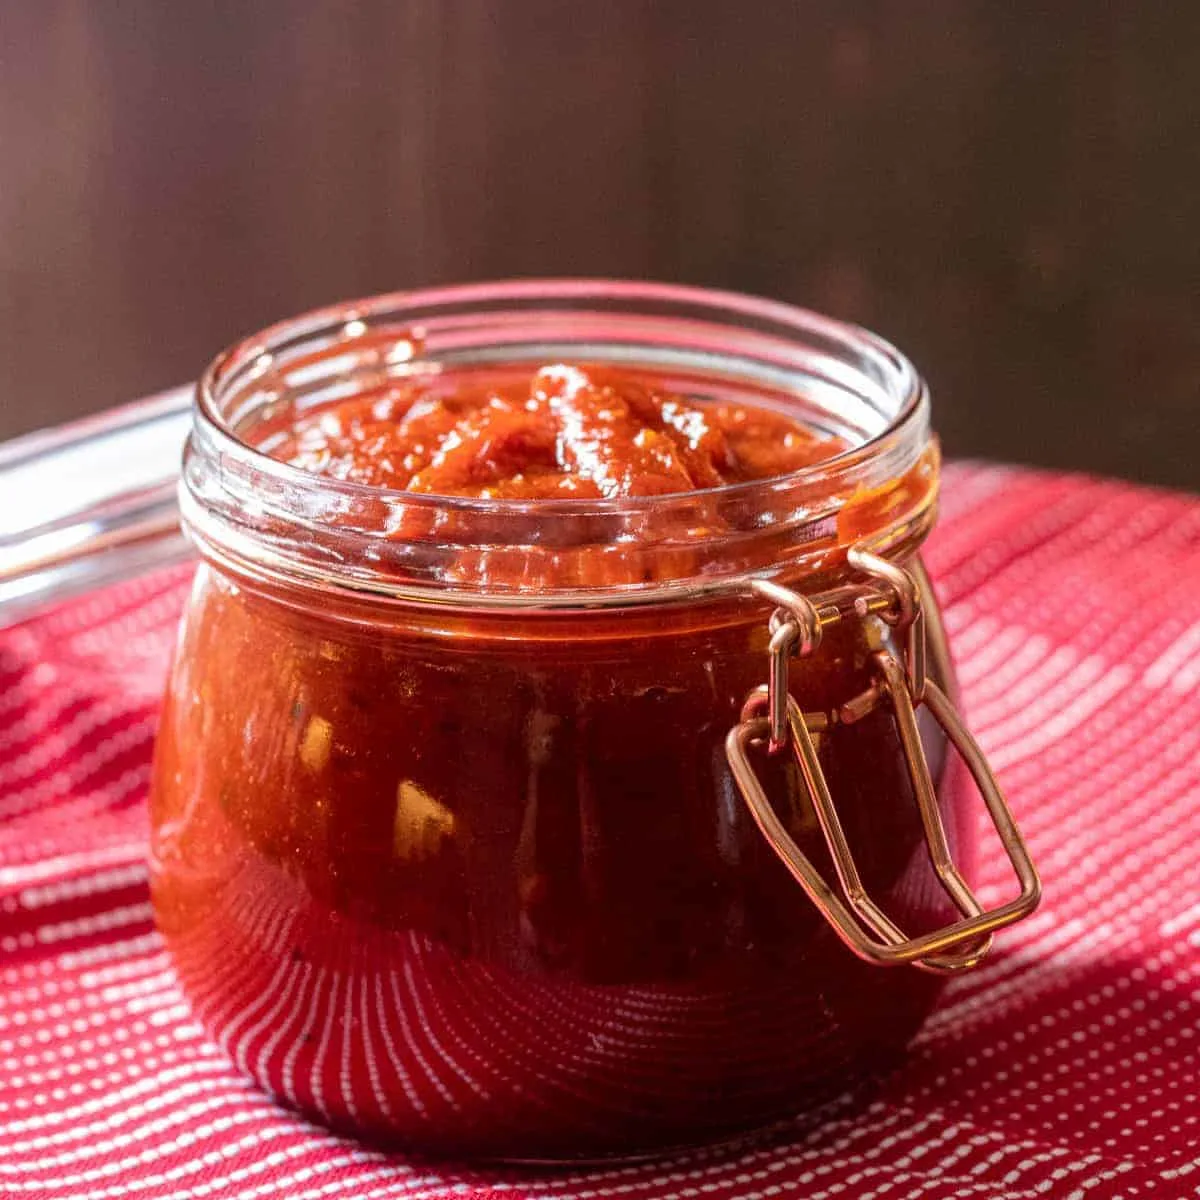 chili jam in a clear jar